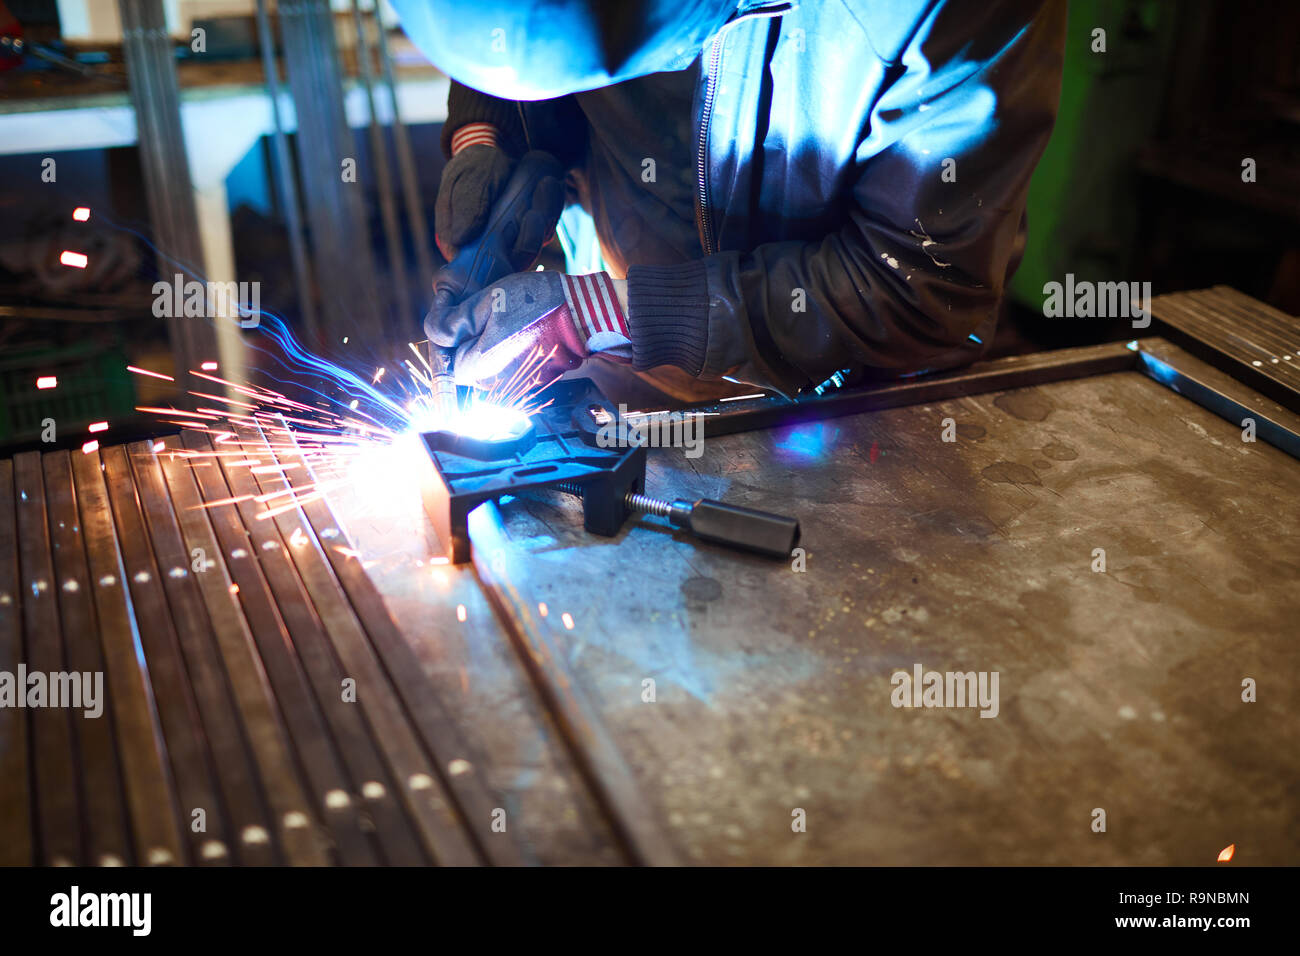 Arc welding in dark workshop Stock Photo